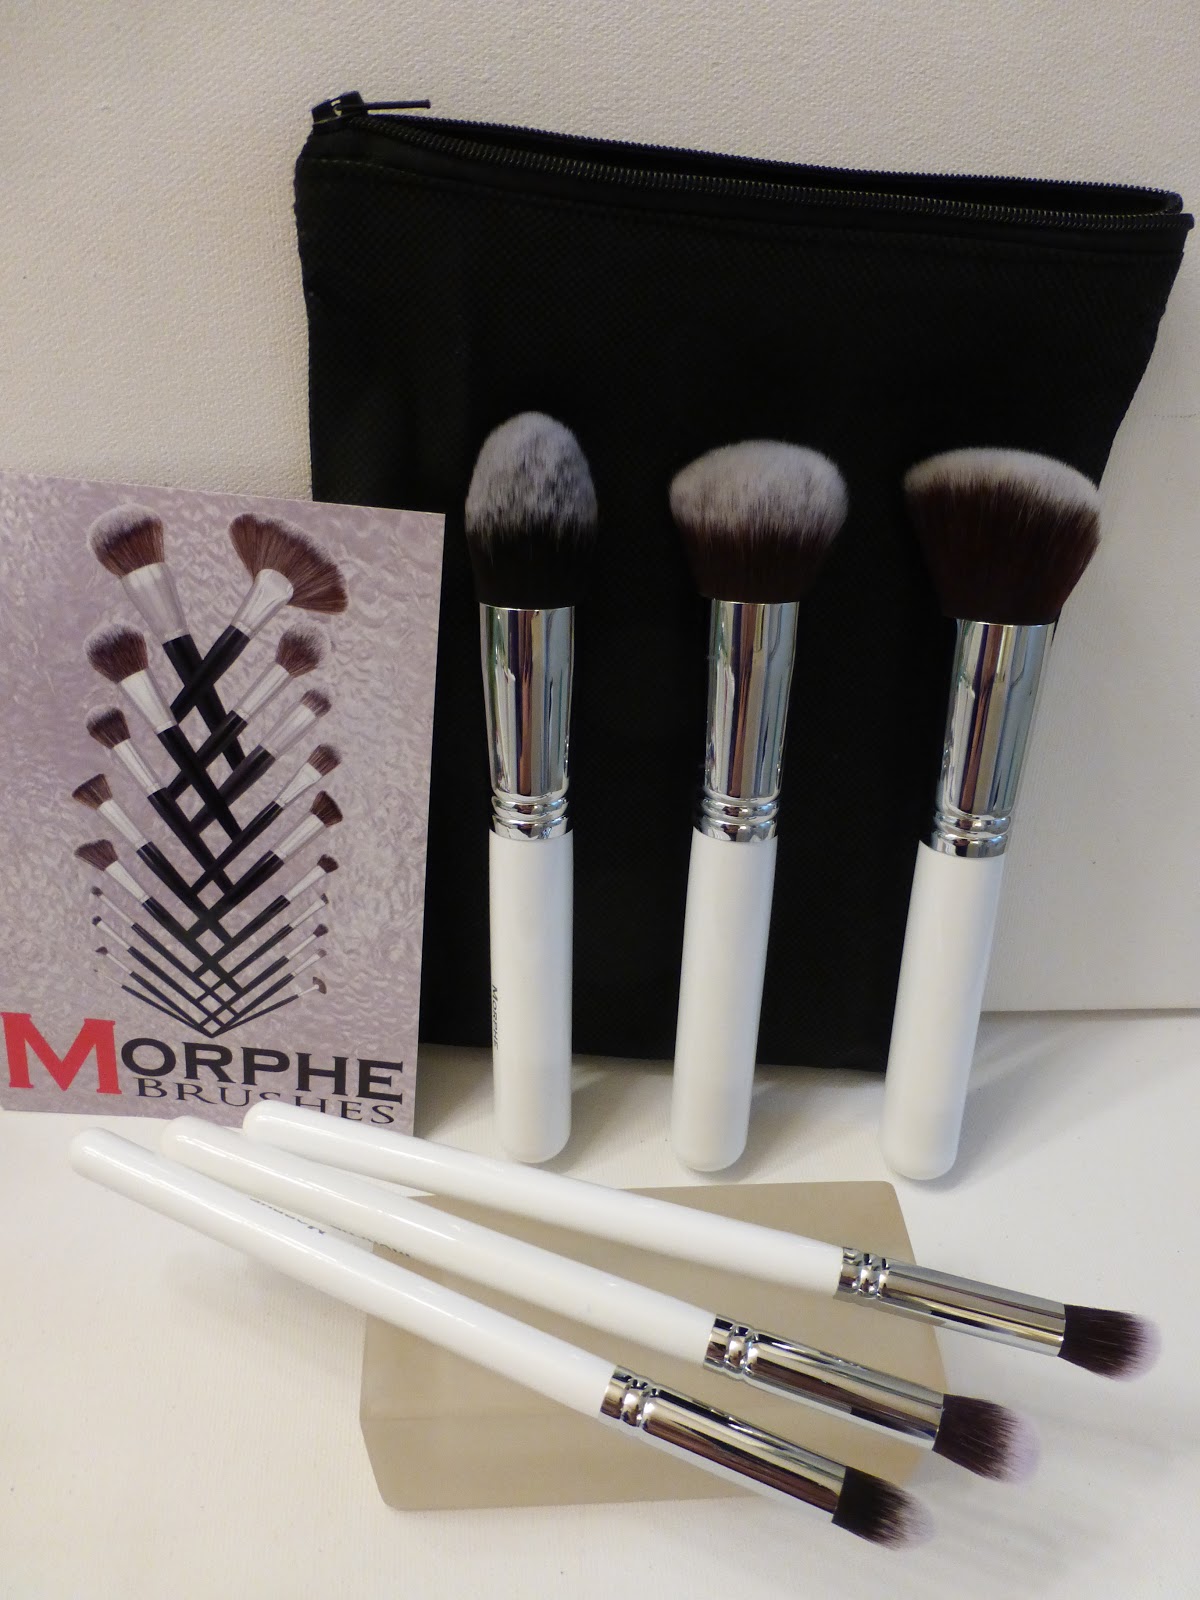 Morphe Makeup Brush Set Canada - Mugeek Vidalondon1200 x 1600